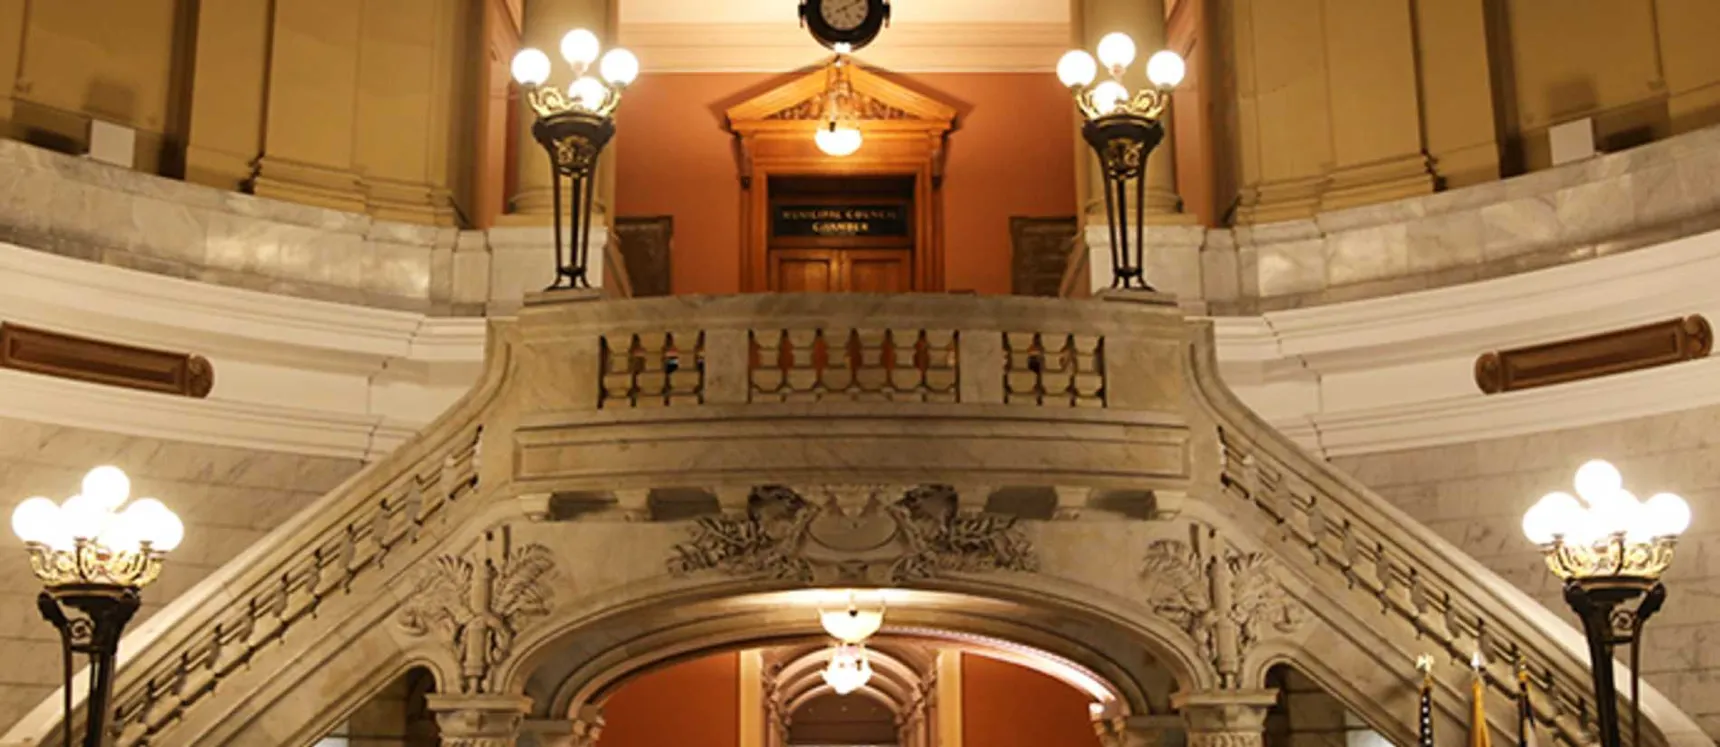 interior of newark city hall